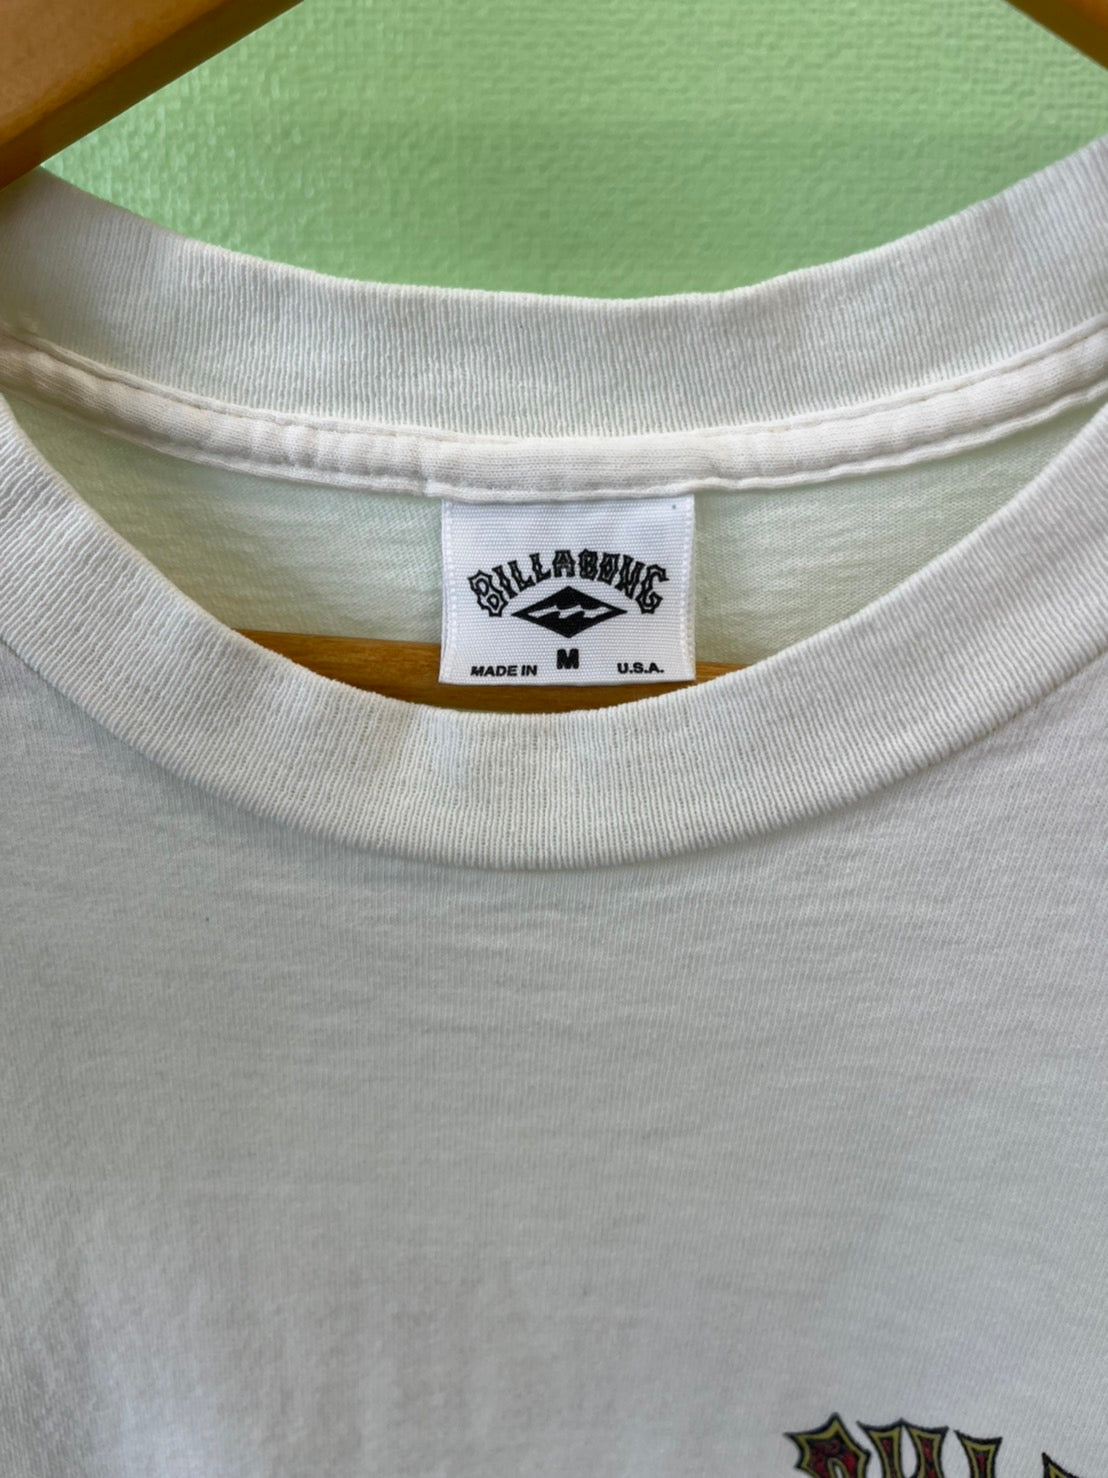 【Billabong】90's vintage billabong rare logo t-shirt made in USA (men's L)